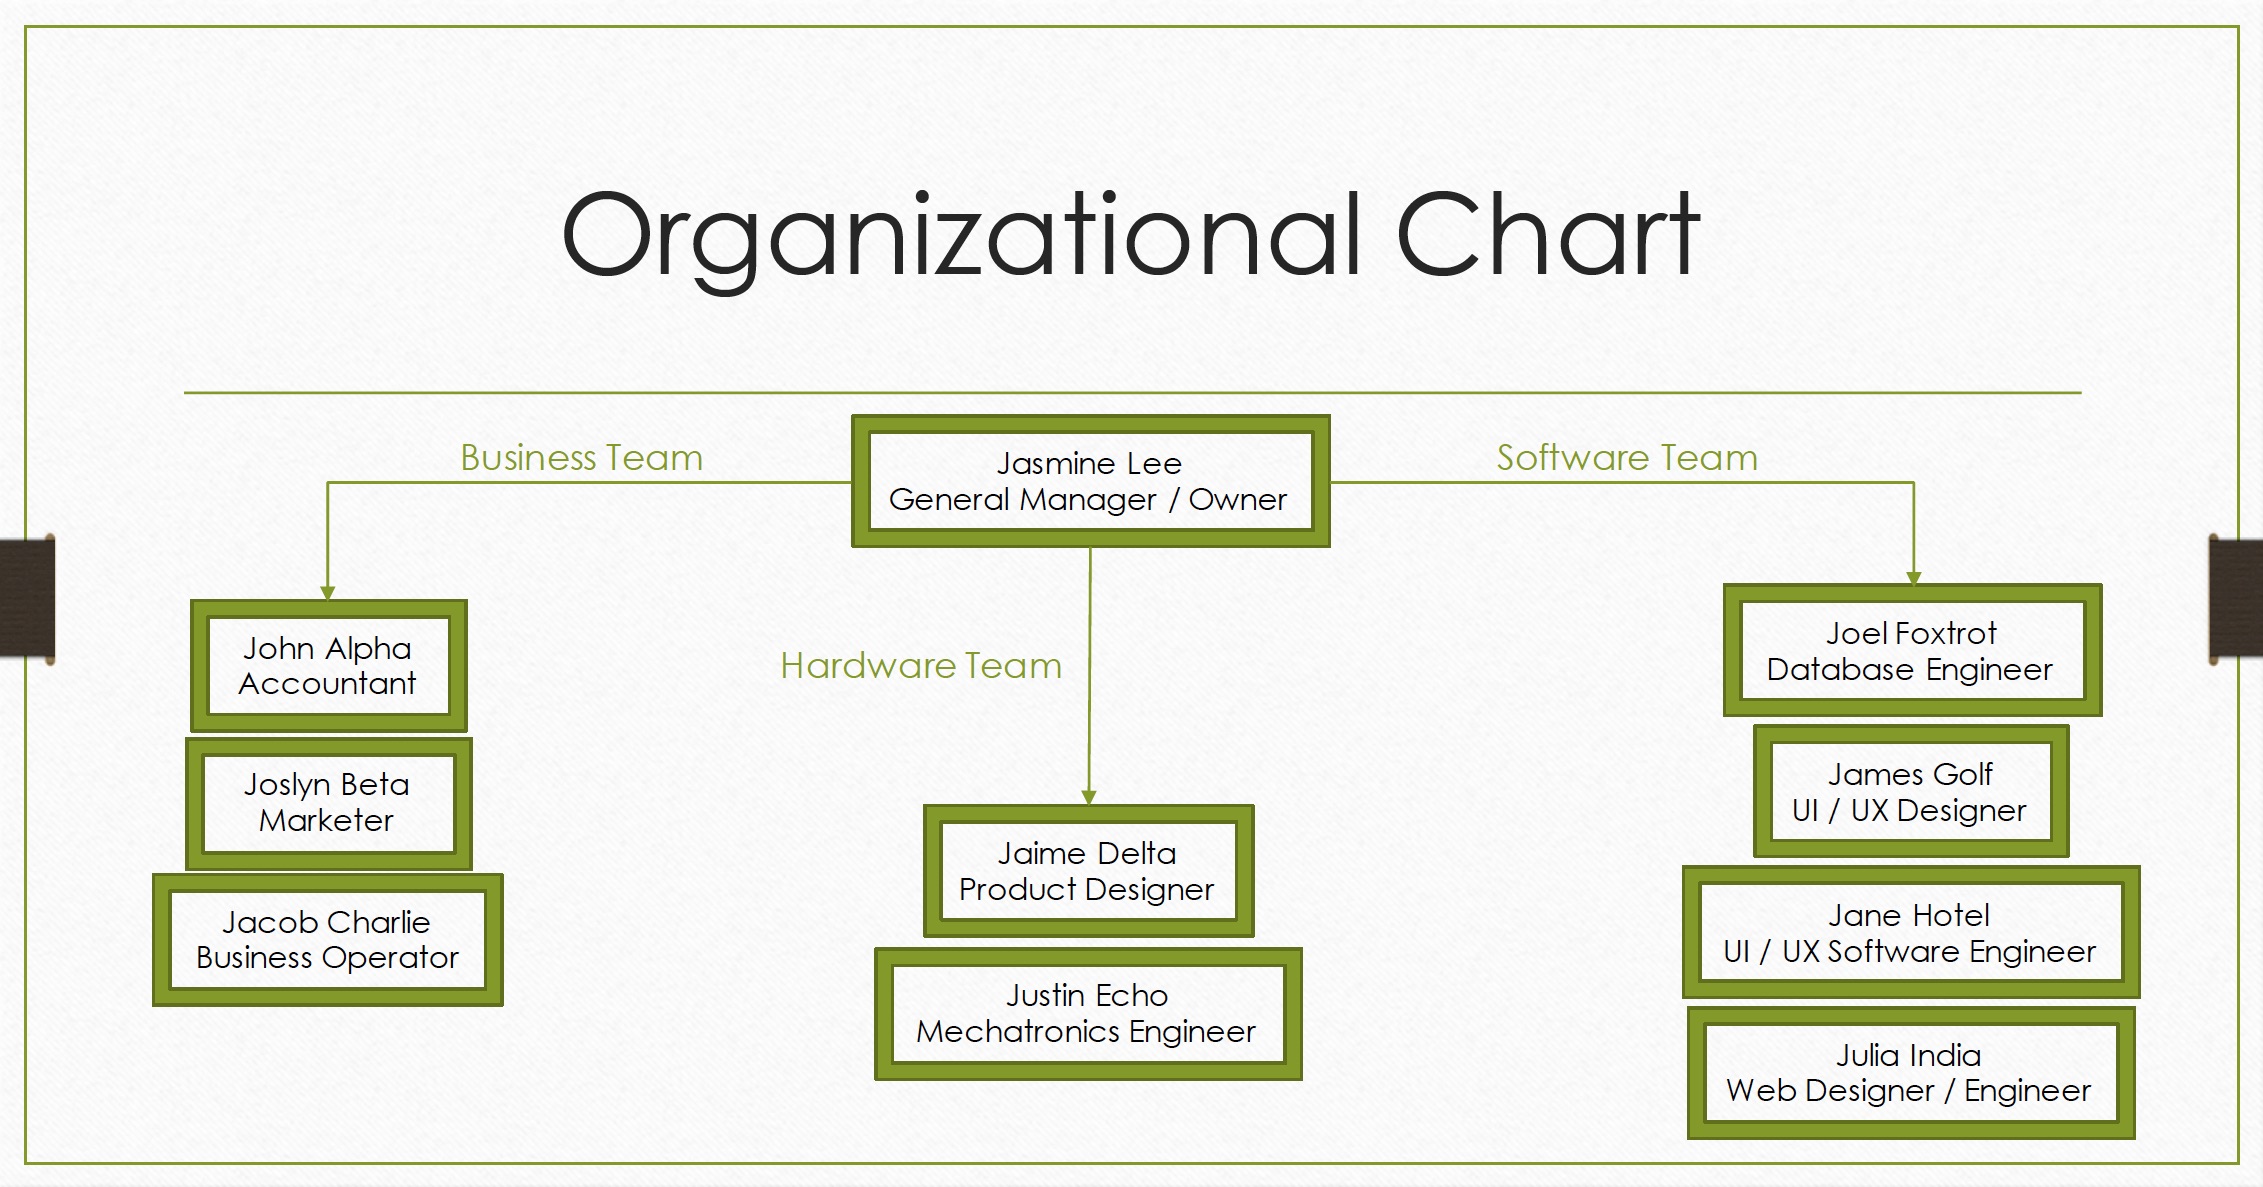 OrganizationalChart.jpg